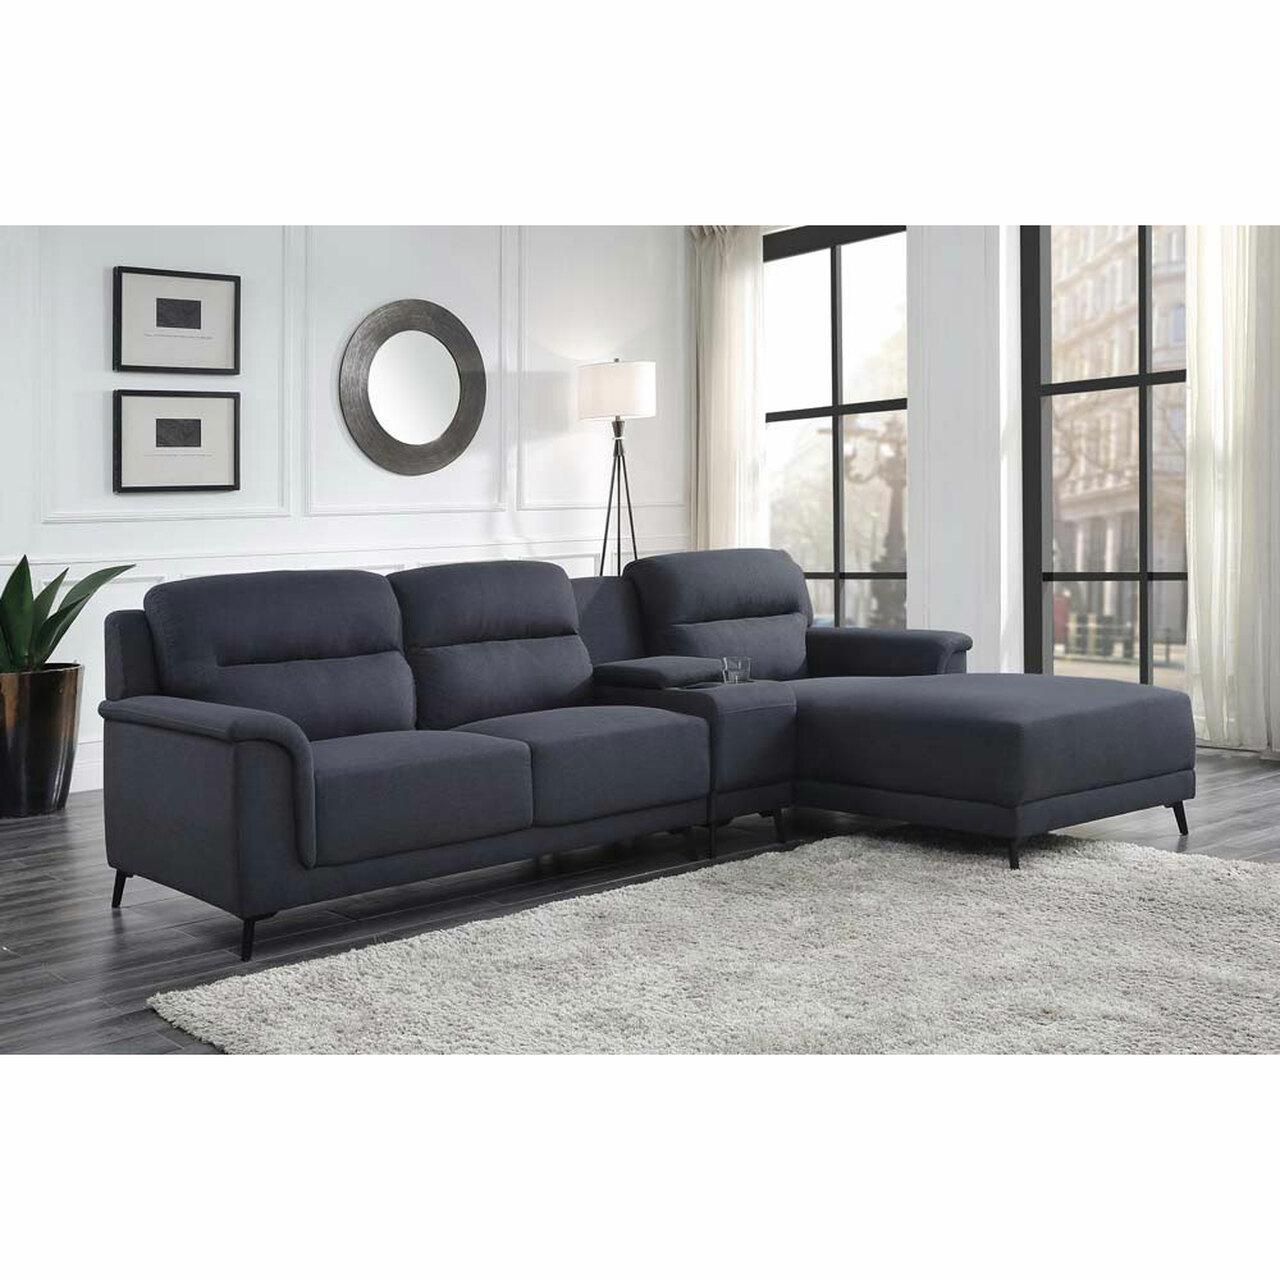 Contemporary, Modern Sectional Sofa Walcher 51900-3pcs in Black Linen